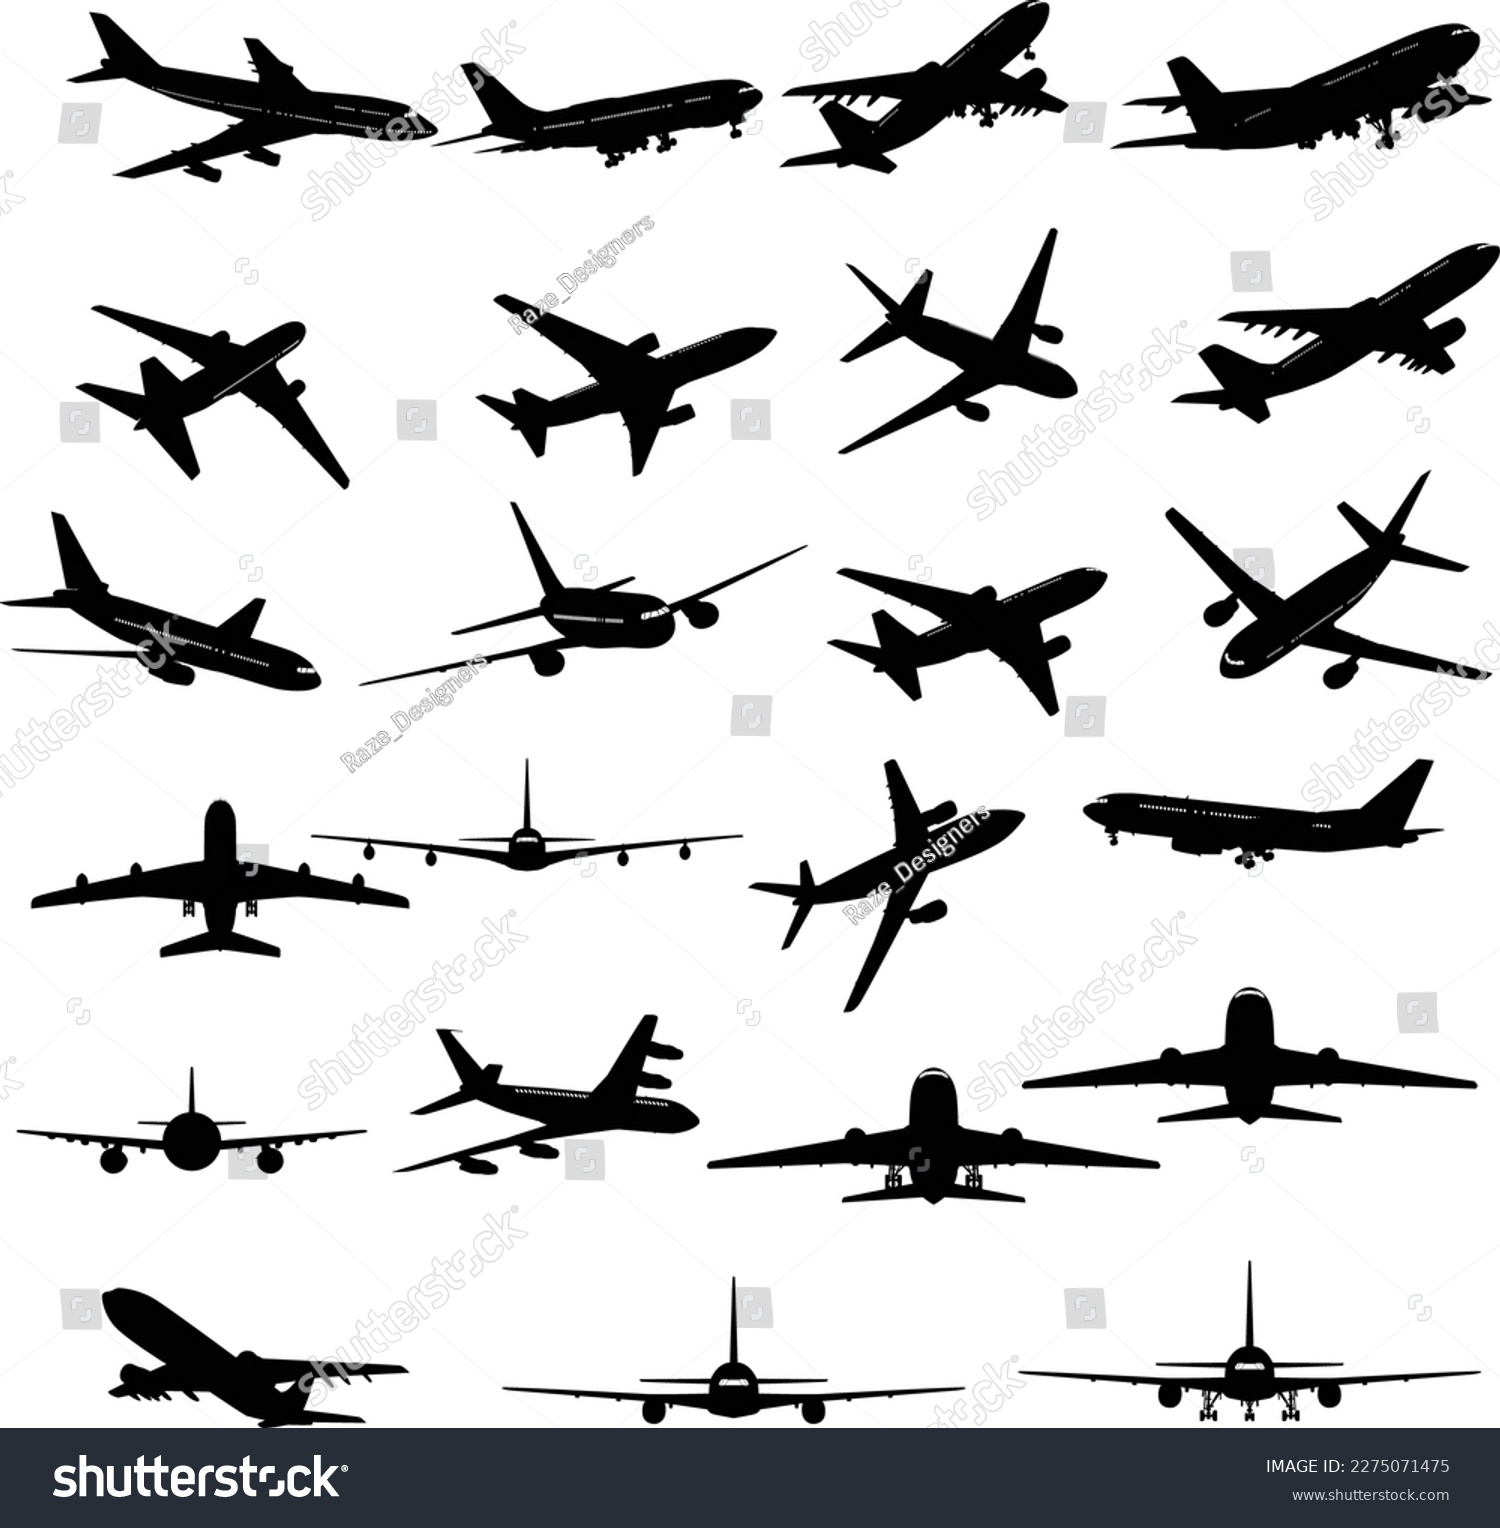 SVG of Plane collection, black planes for education, flight set, planes silhouette set EPS10 svg